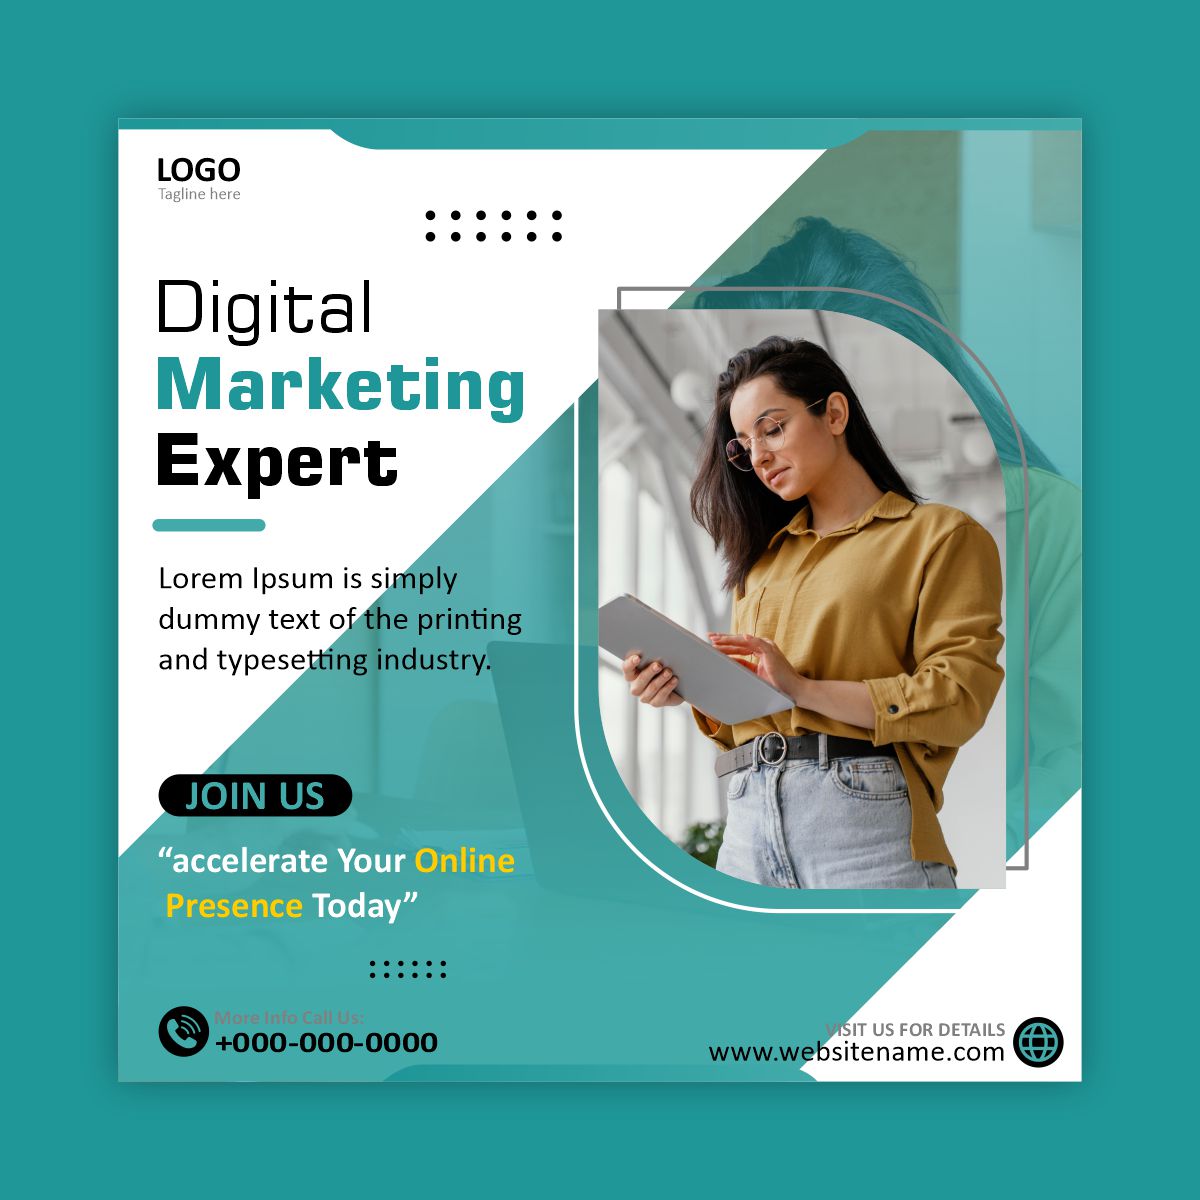 Digital Marketing Expert poster vector design for free